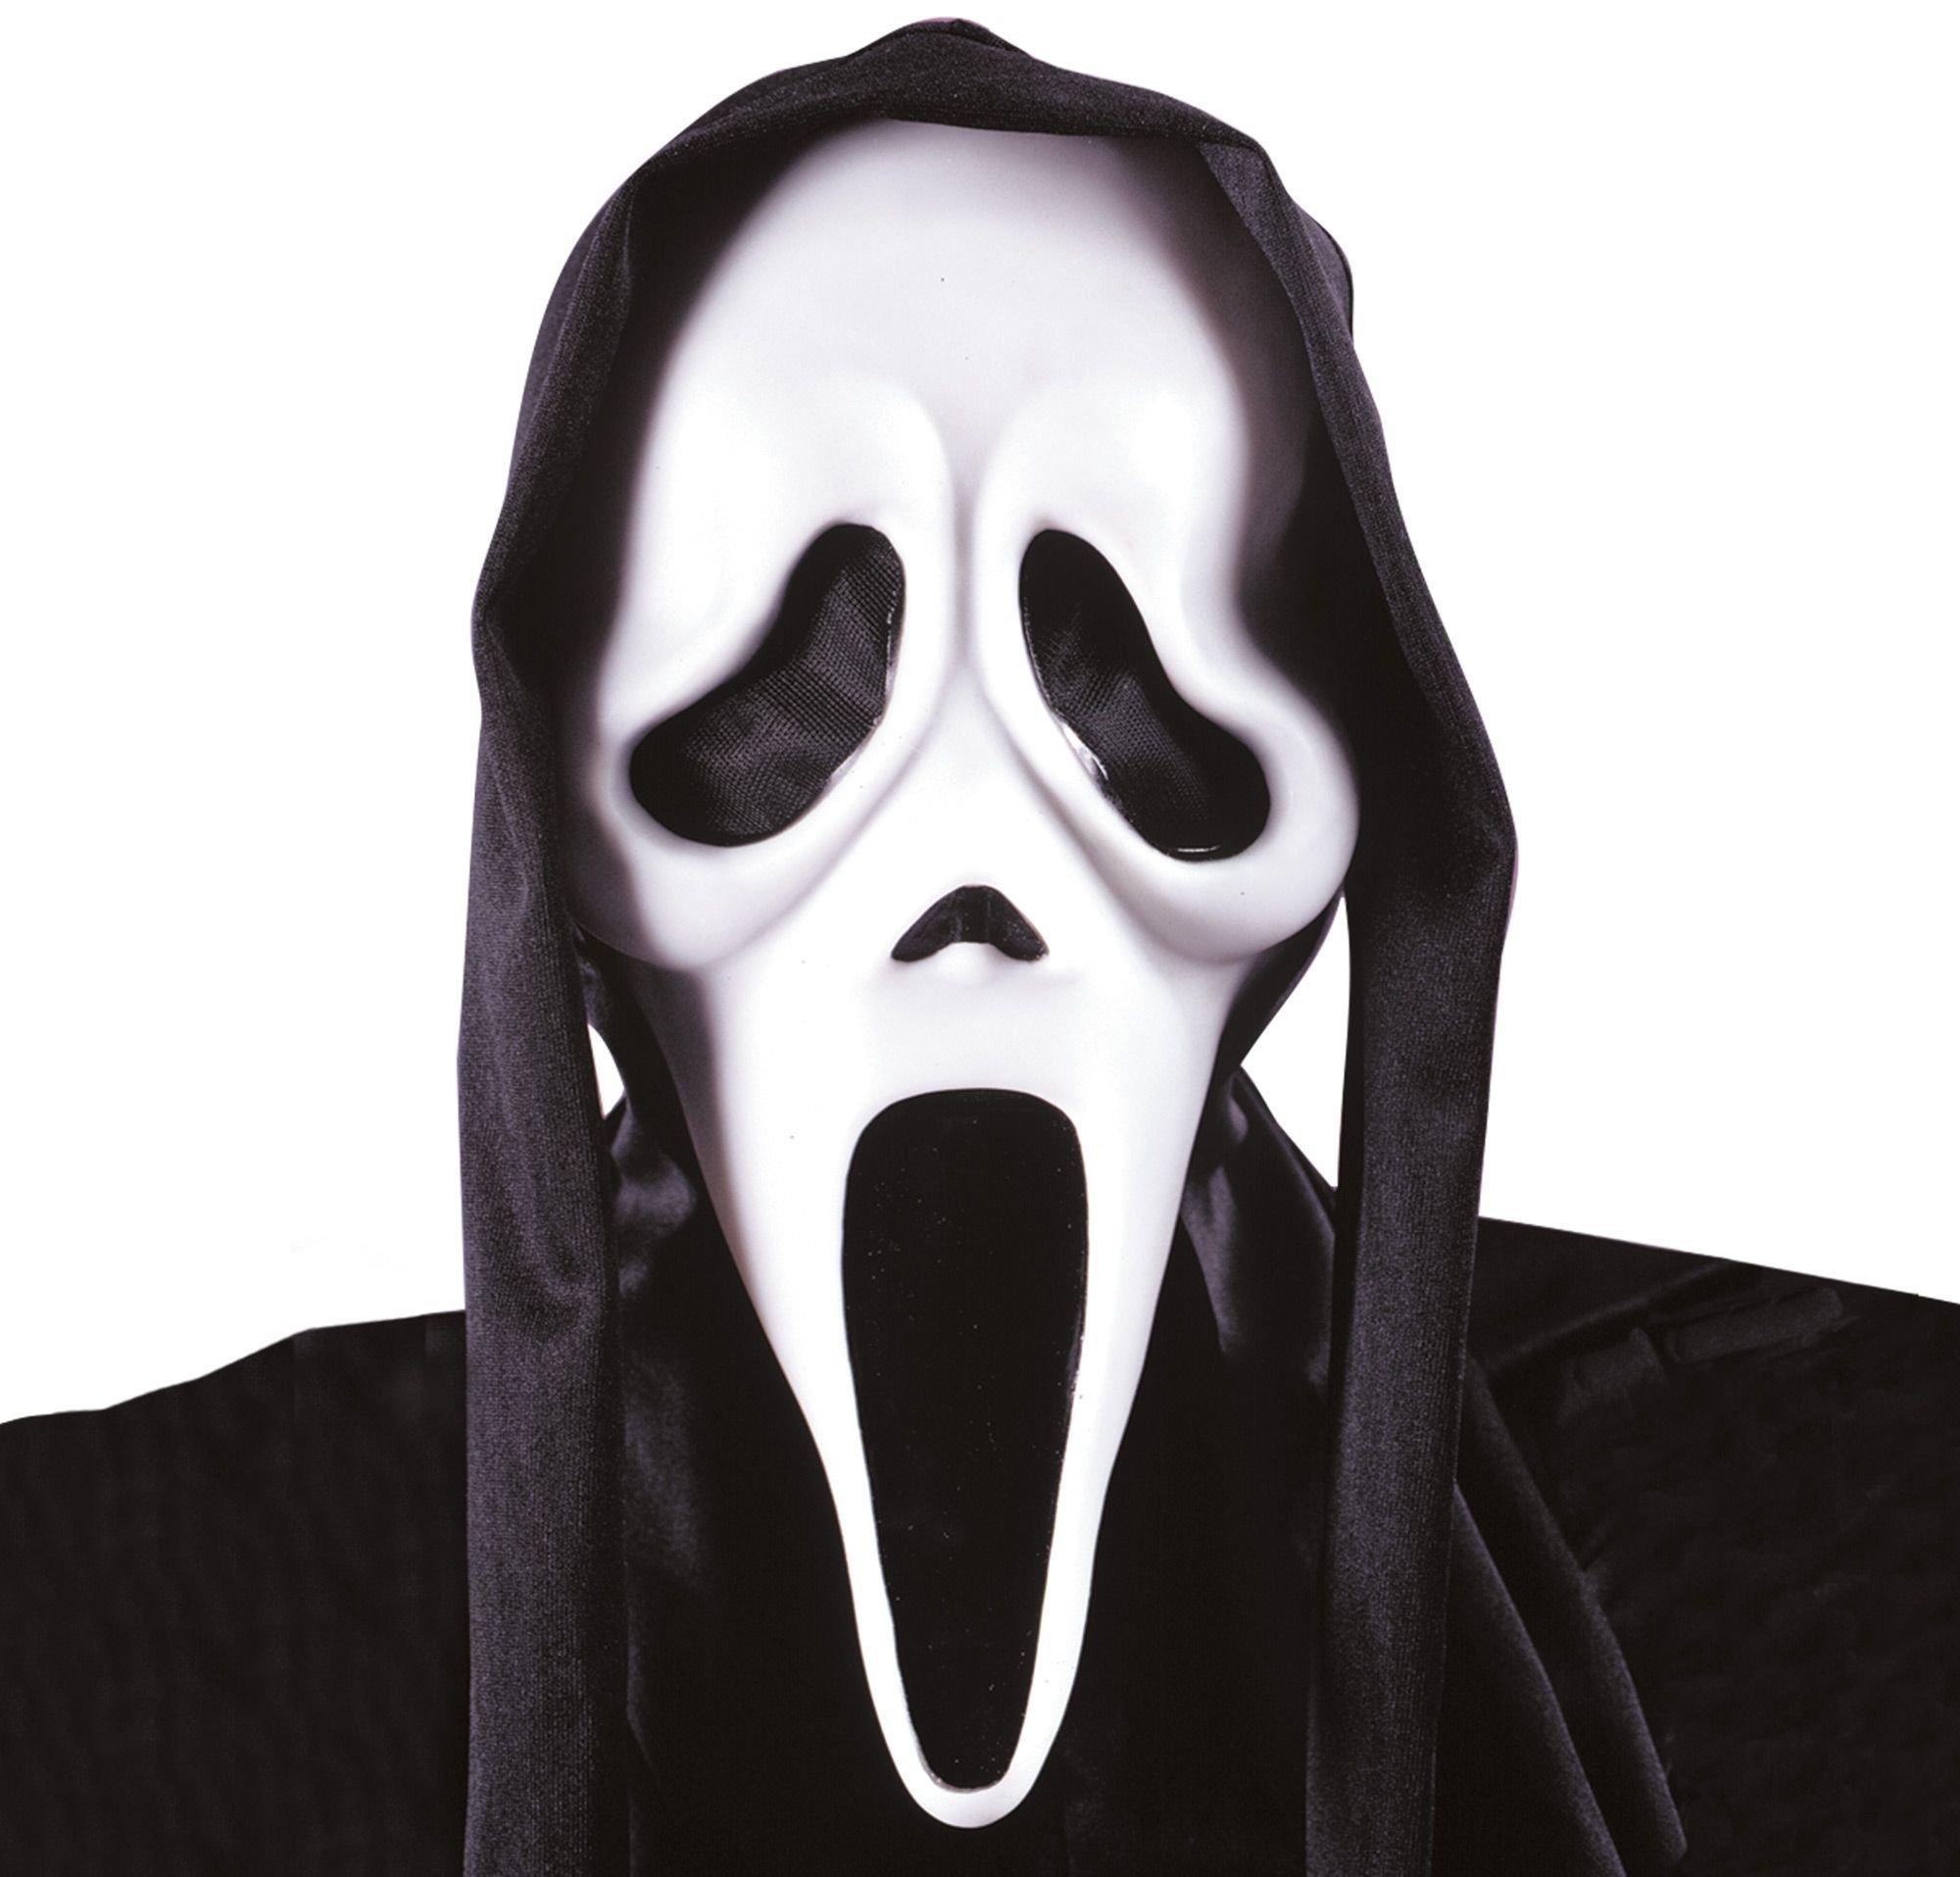 creepy white mask designs